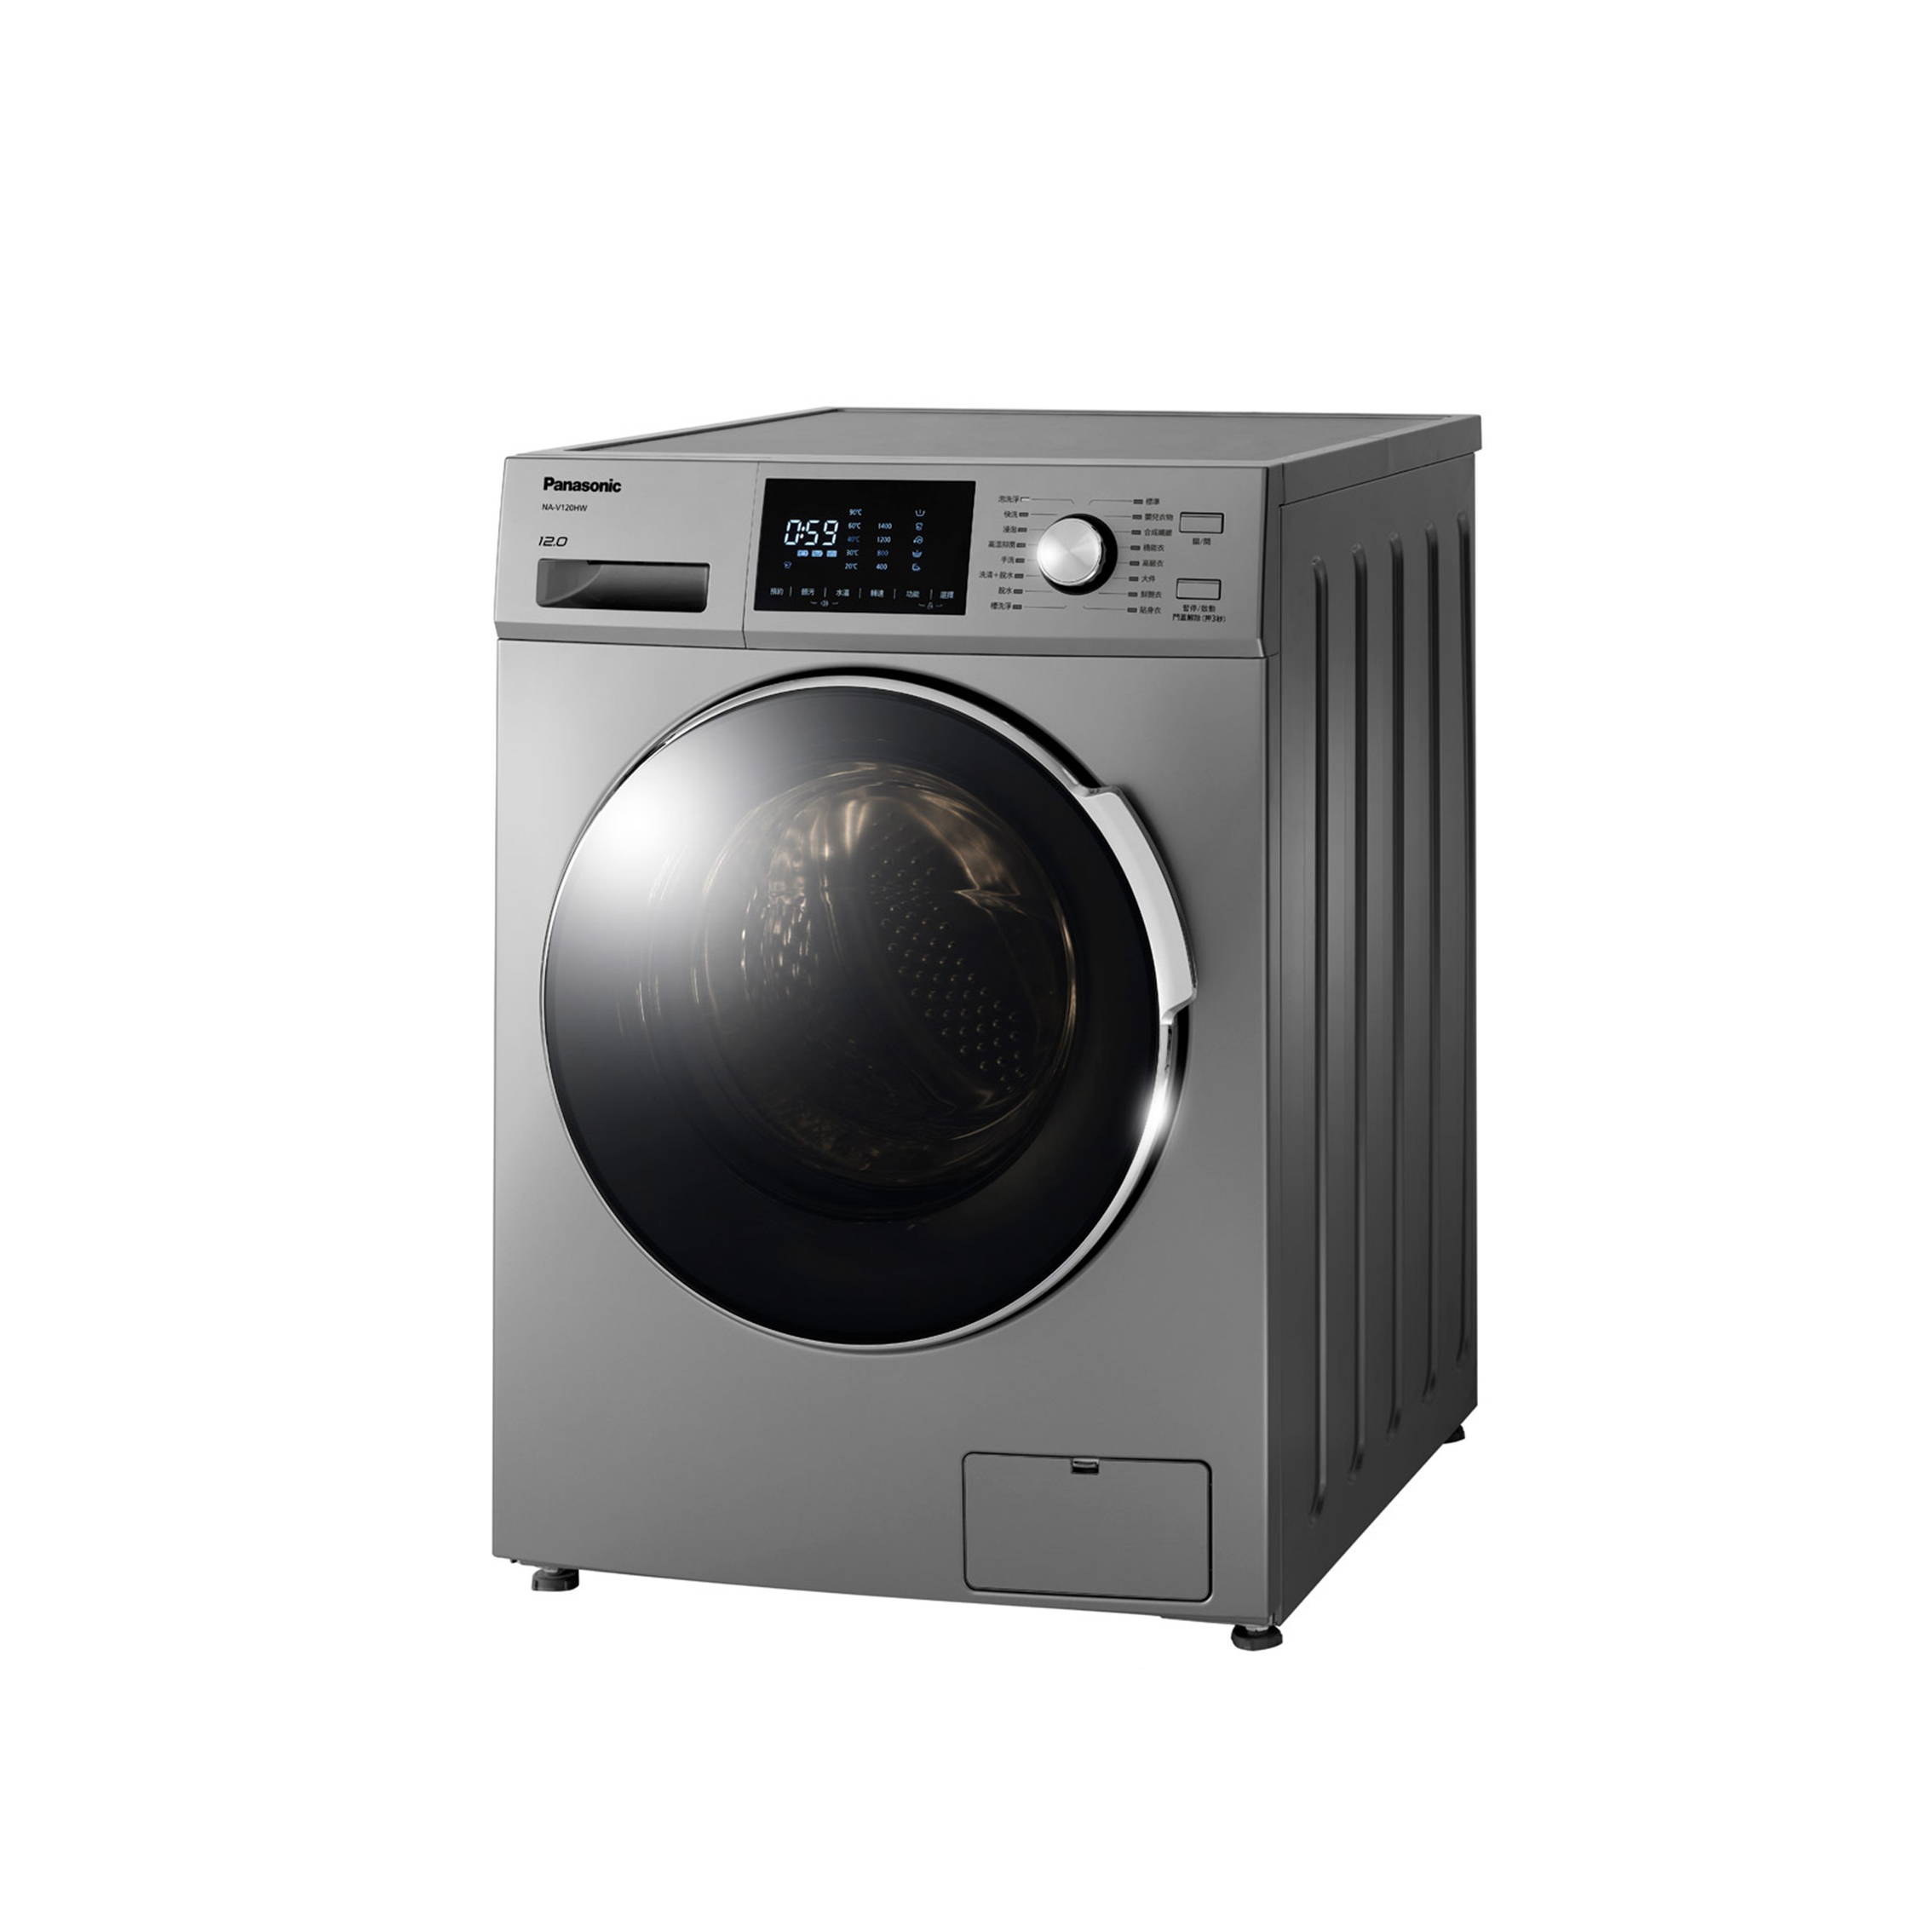 Panasonic國際牌 變頻12公斤洗脫滾筒洗衣機 NA-V120HW-G 免卡分期